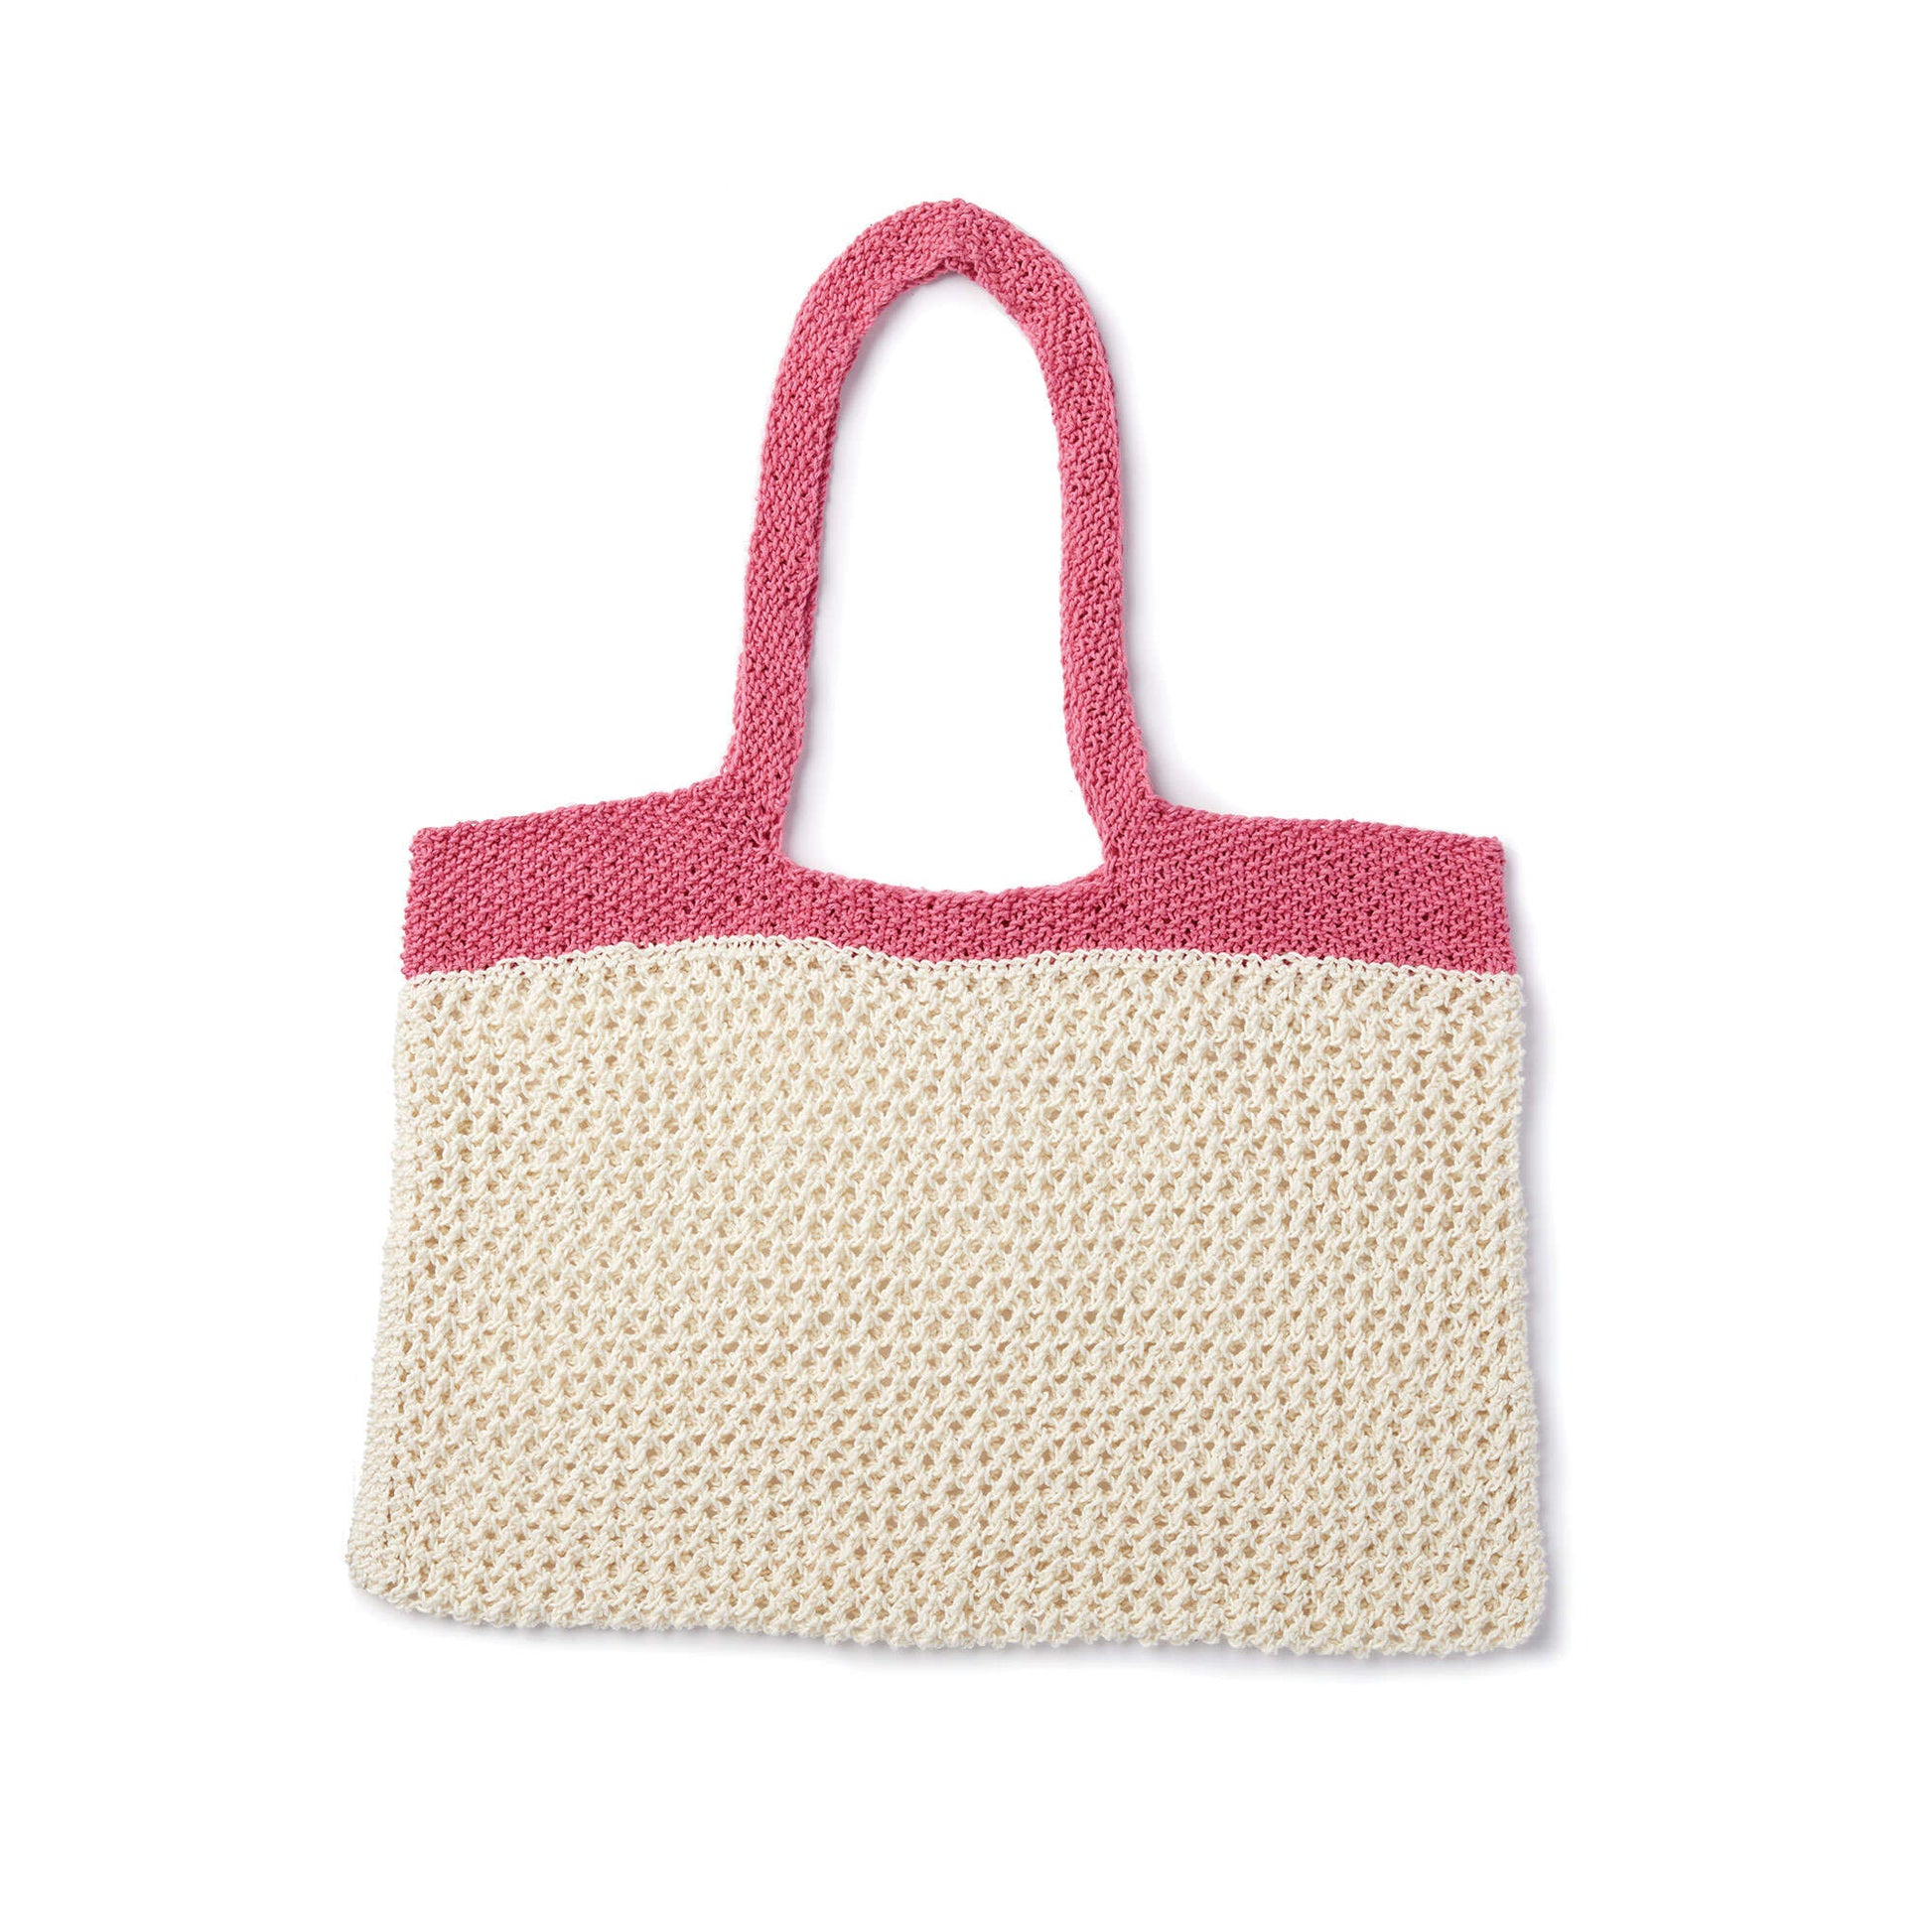 Free Patons Knit Mesh Market Bag Pattern